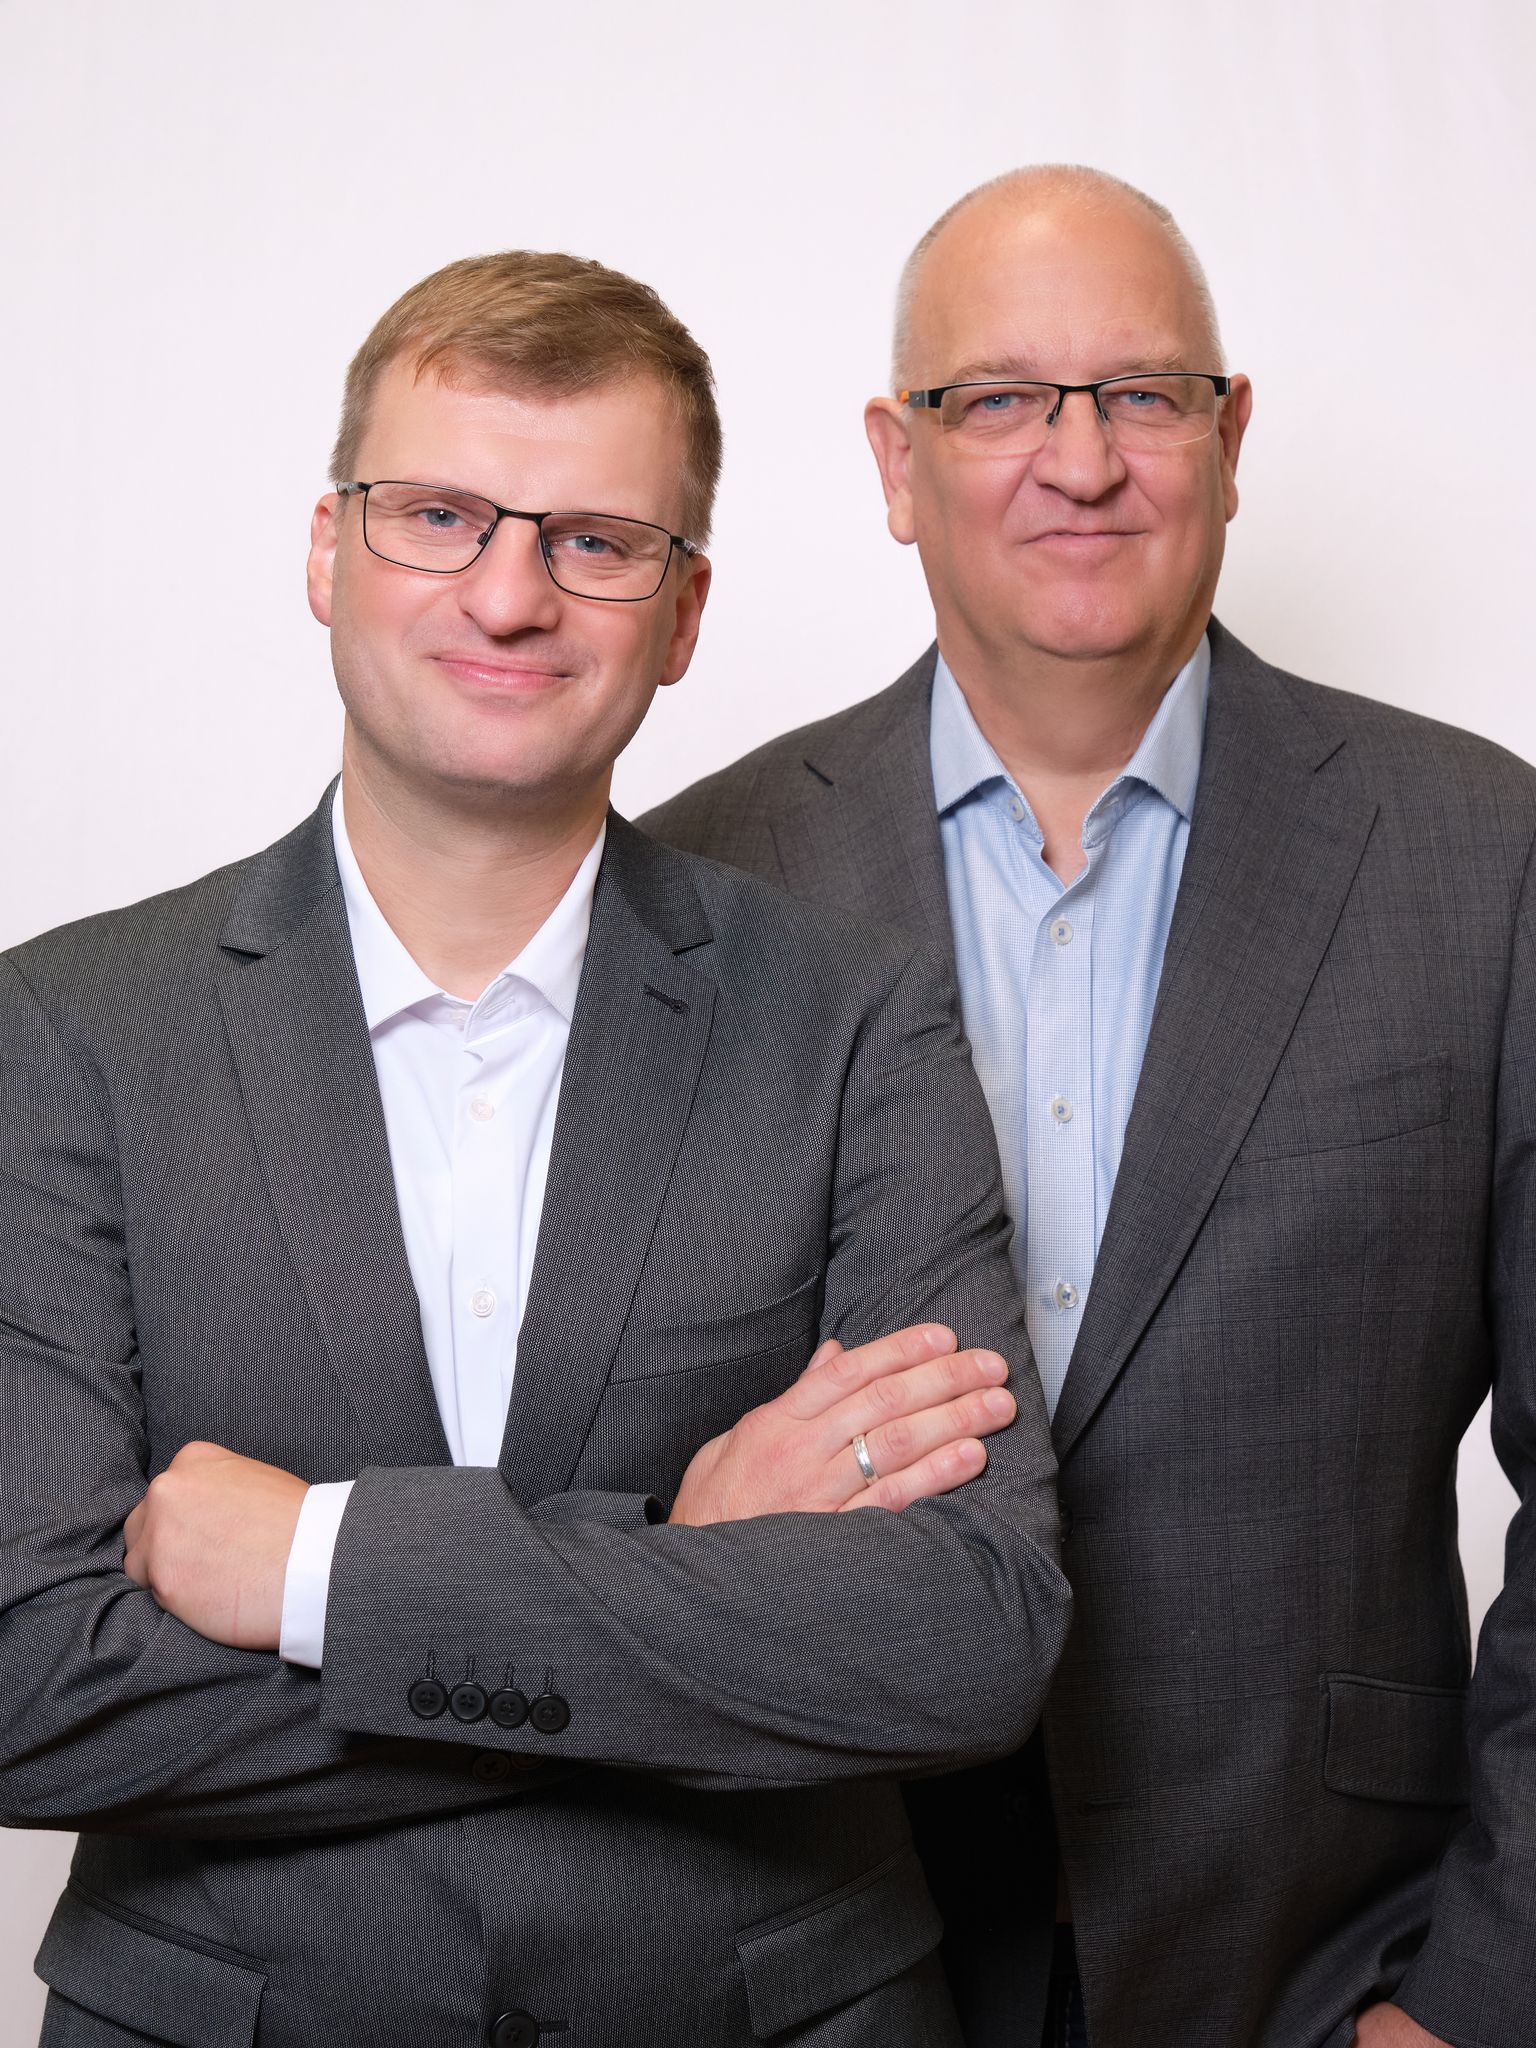 Ruslan Richter and Rolf Nick, Managing Directors of Schürzholz + Nick